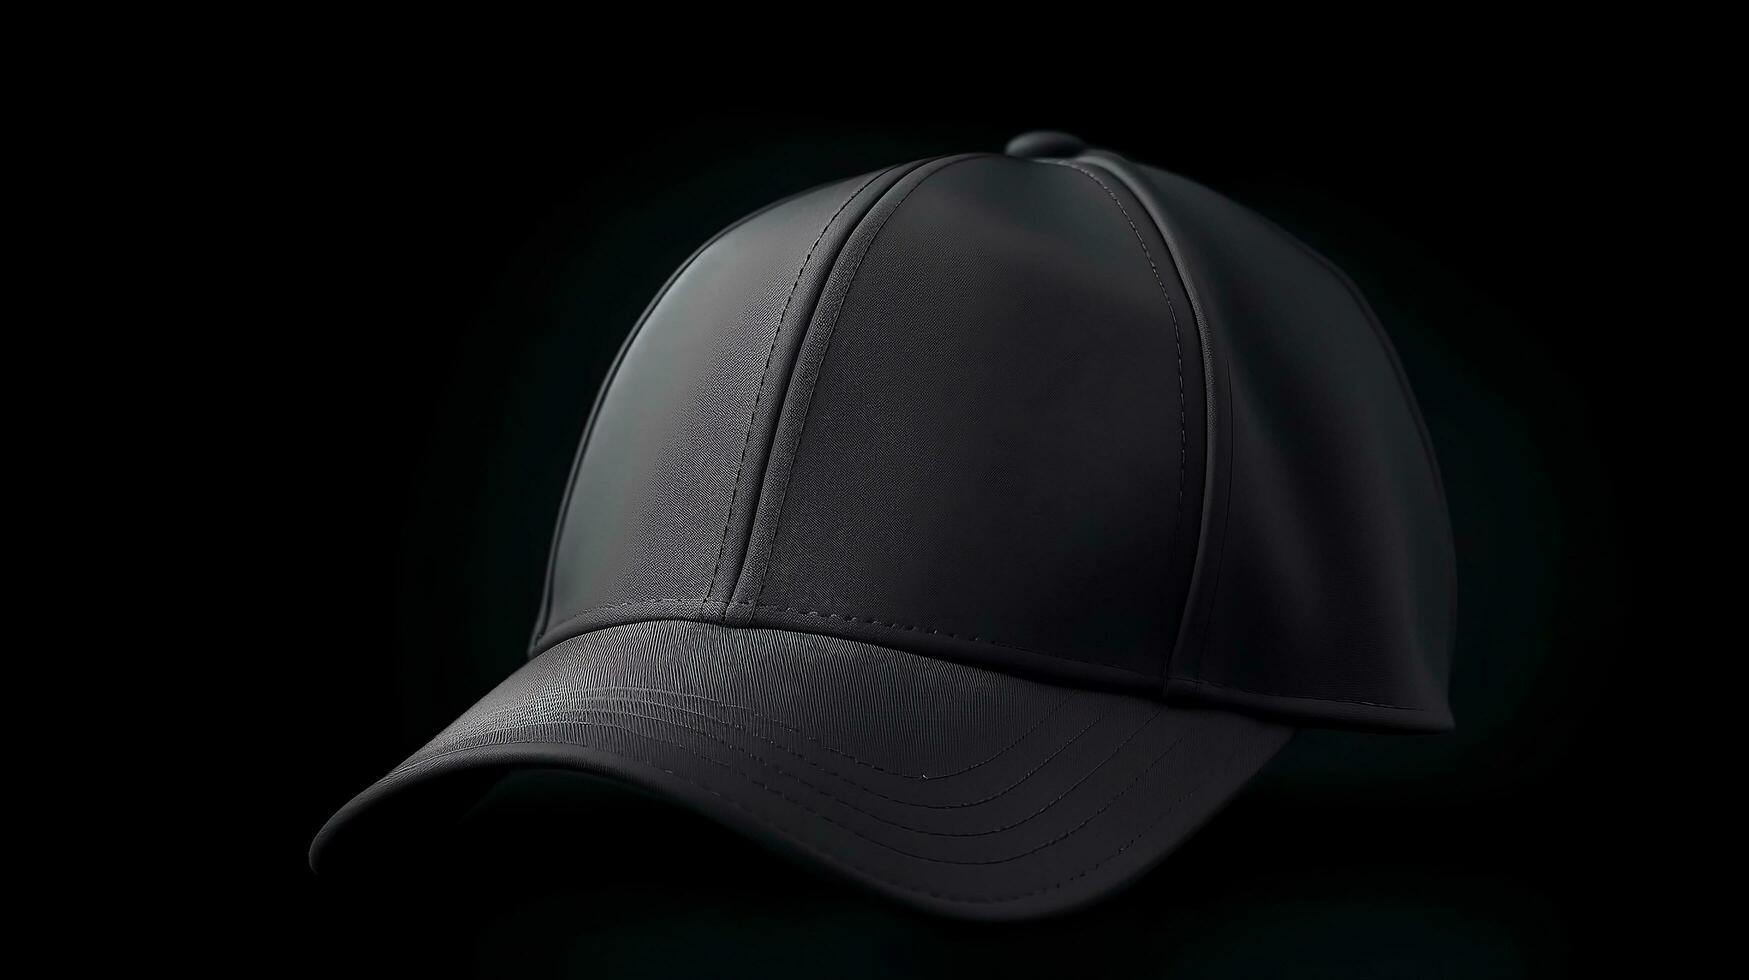 Black Cap Mock Up. Isolated realistic black baseball cap hat photo